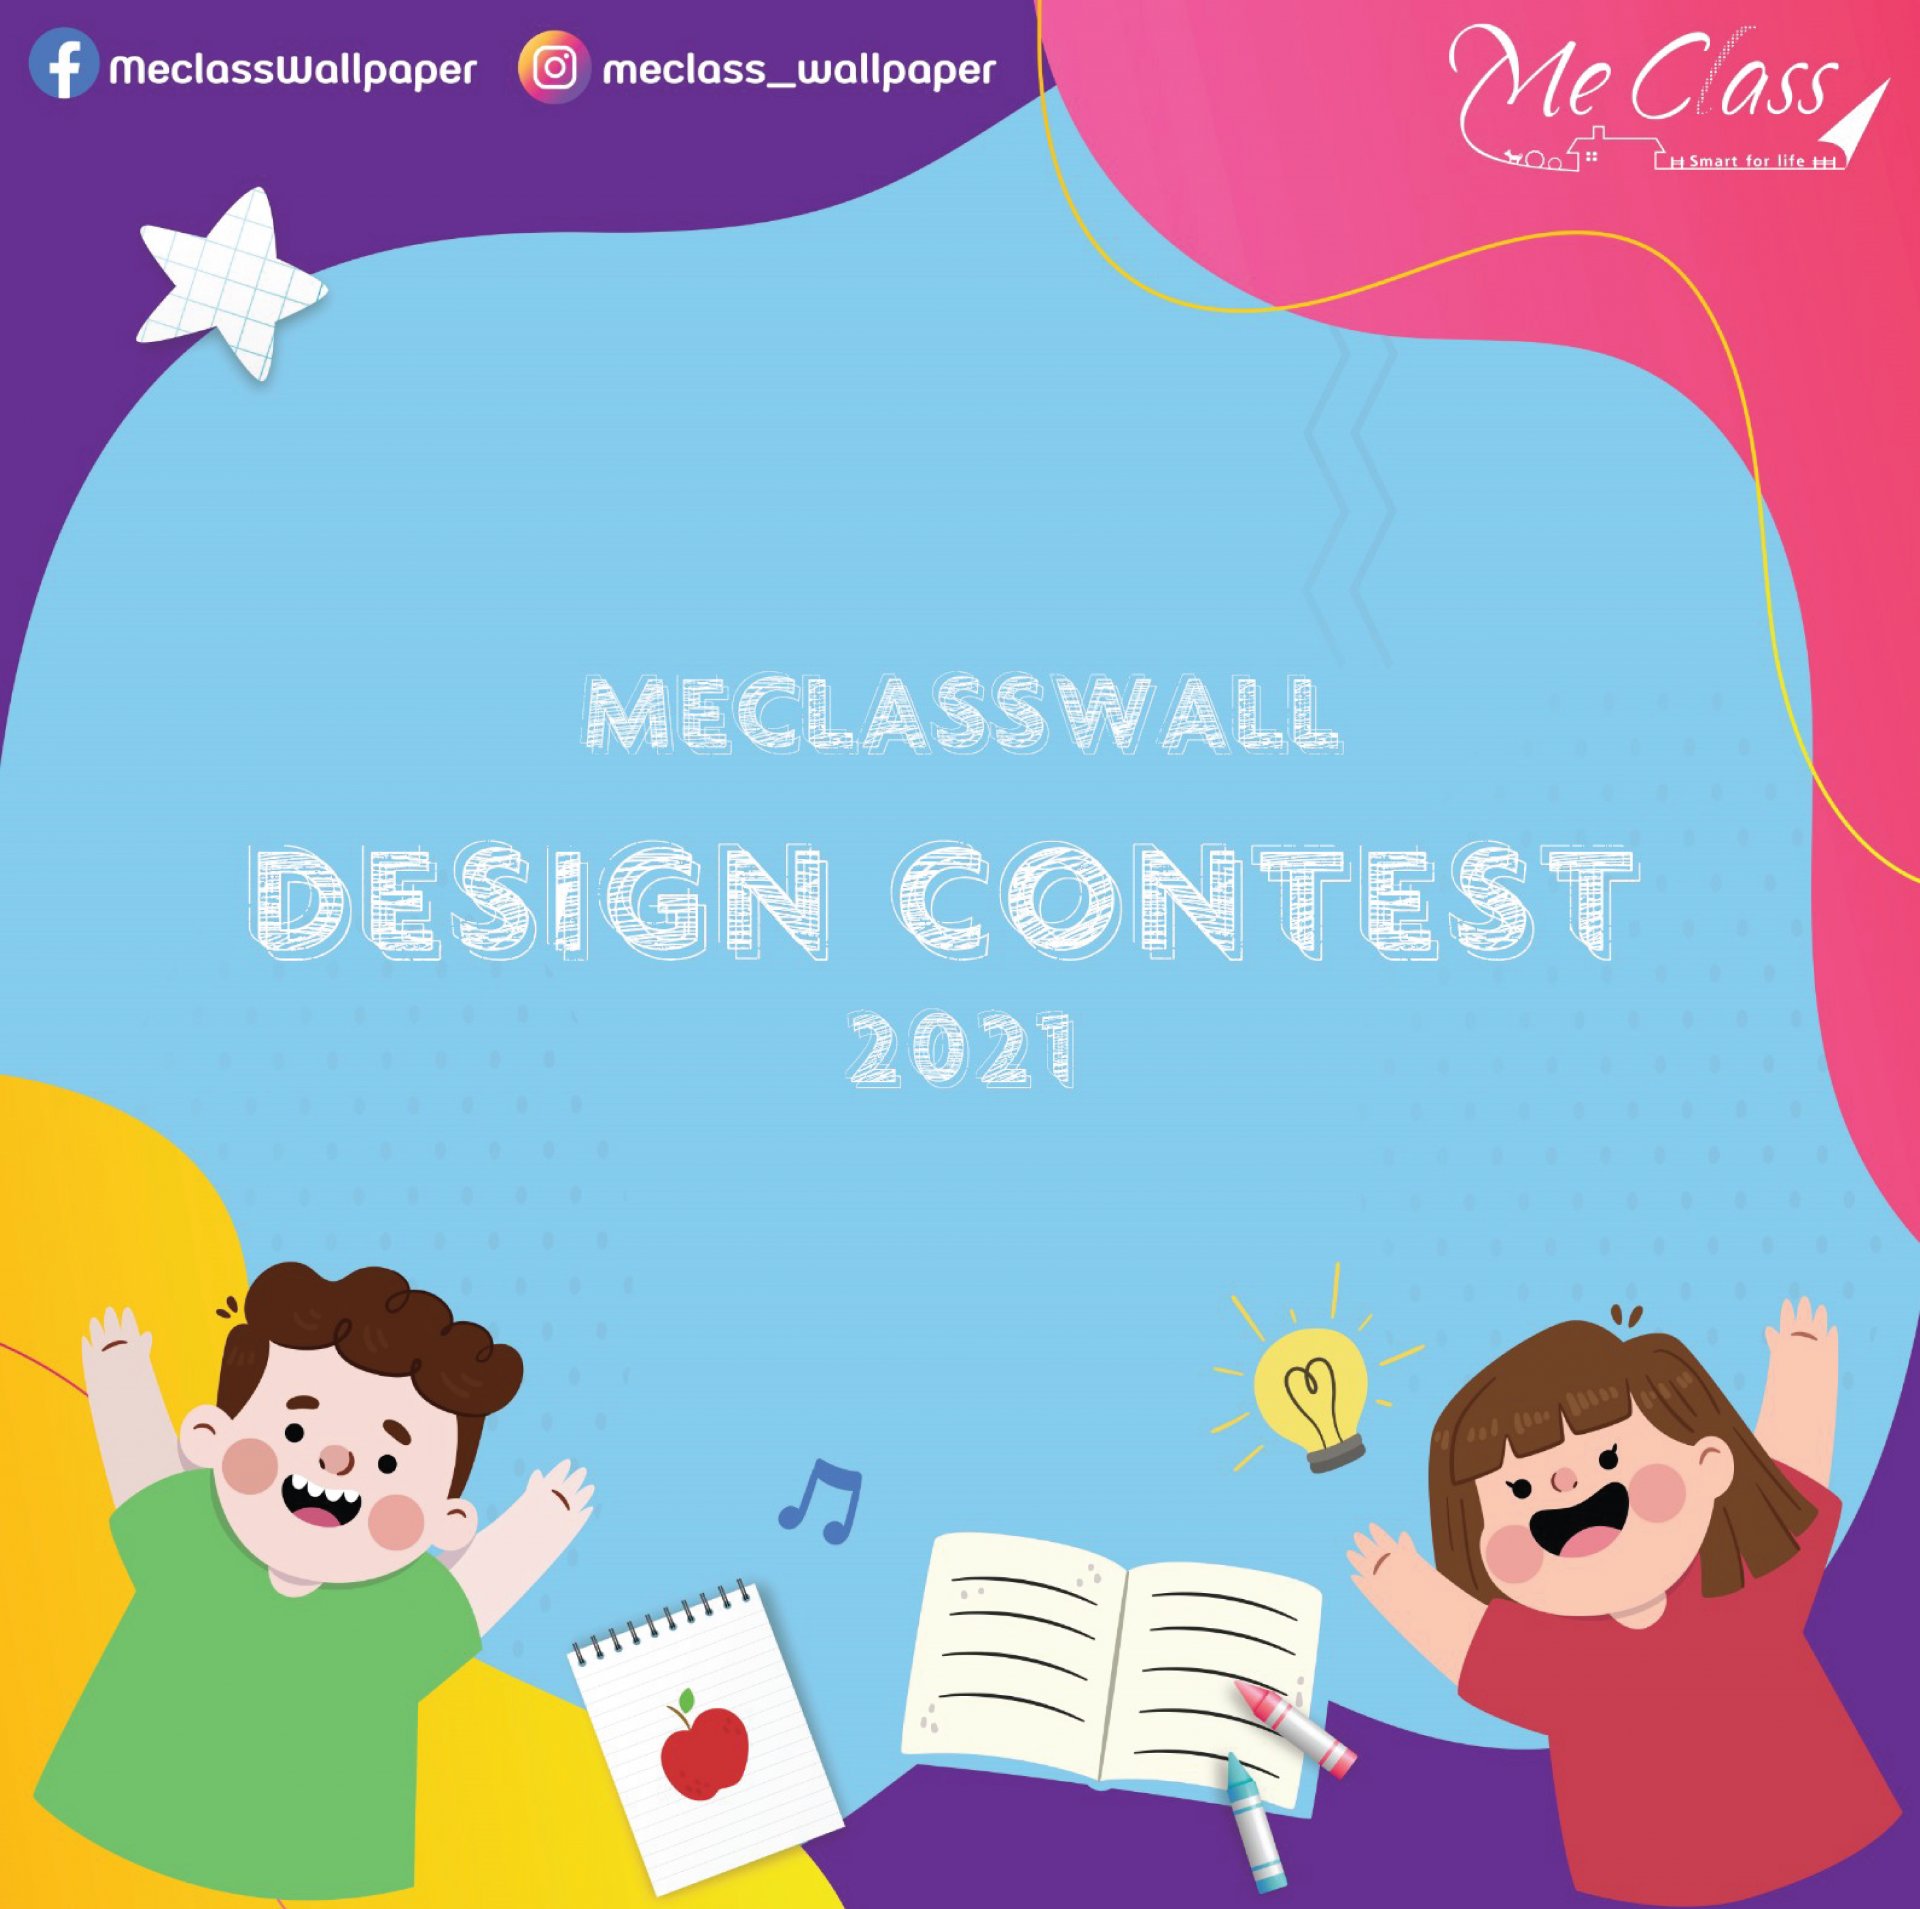 Meclasswall Design Contest 2021